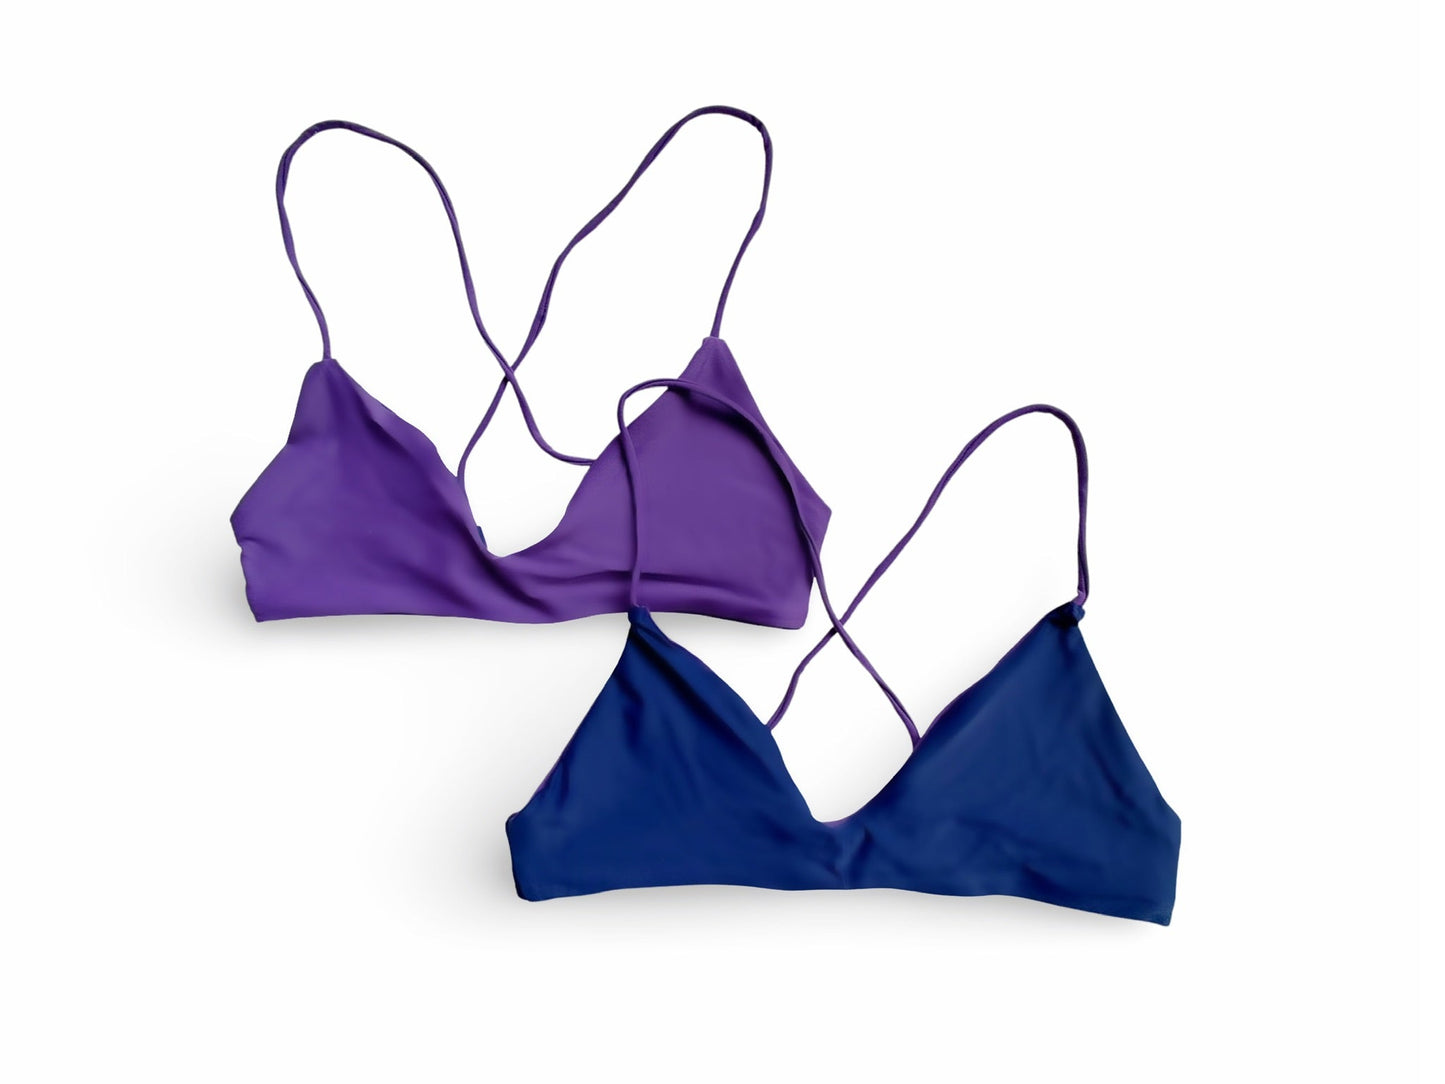 Plum Pretty Reversible Cross-Back Top by Bikini Flavors. Purple reverses to navy blue. American made. 